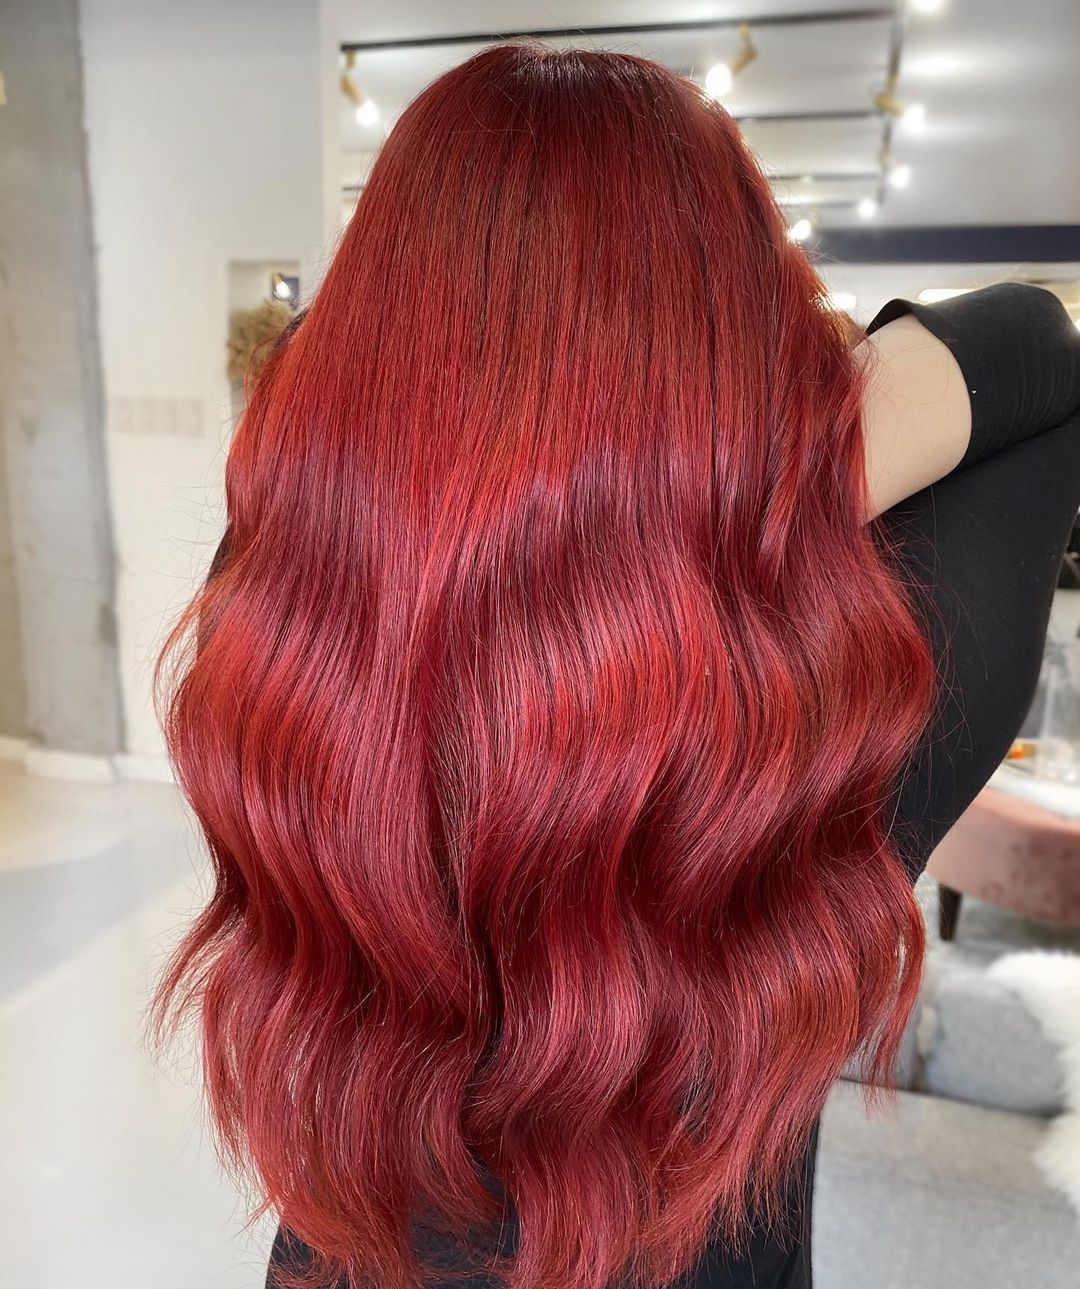 pelo rojo cereza brillante